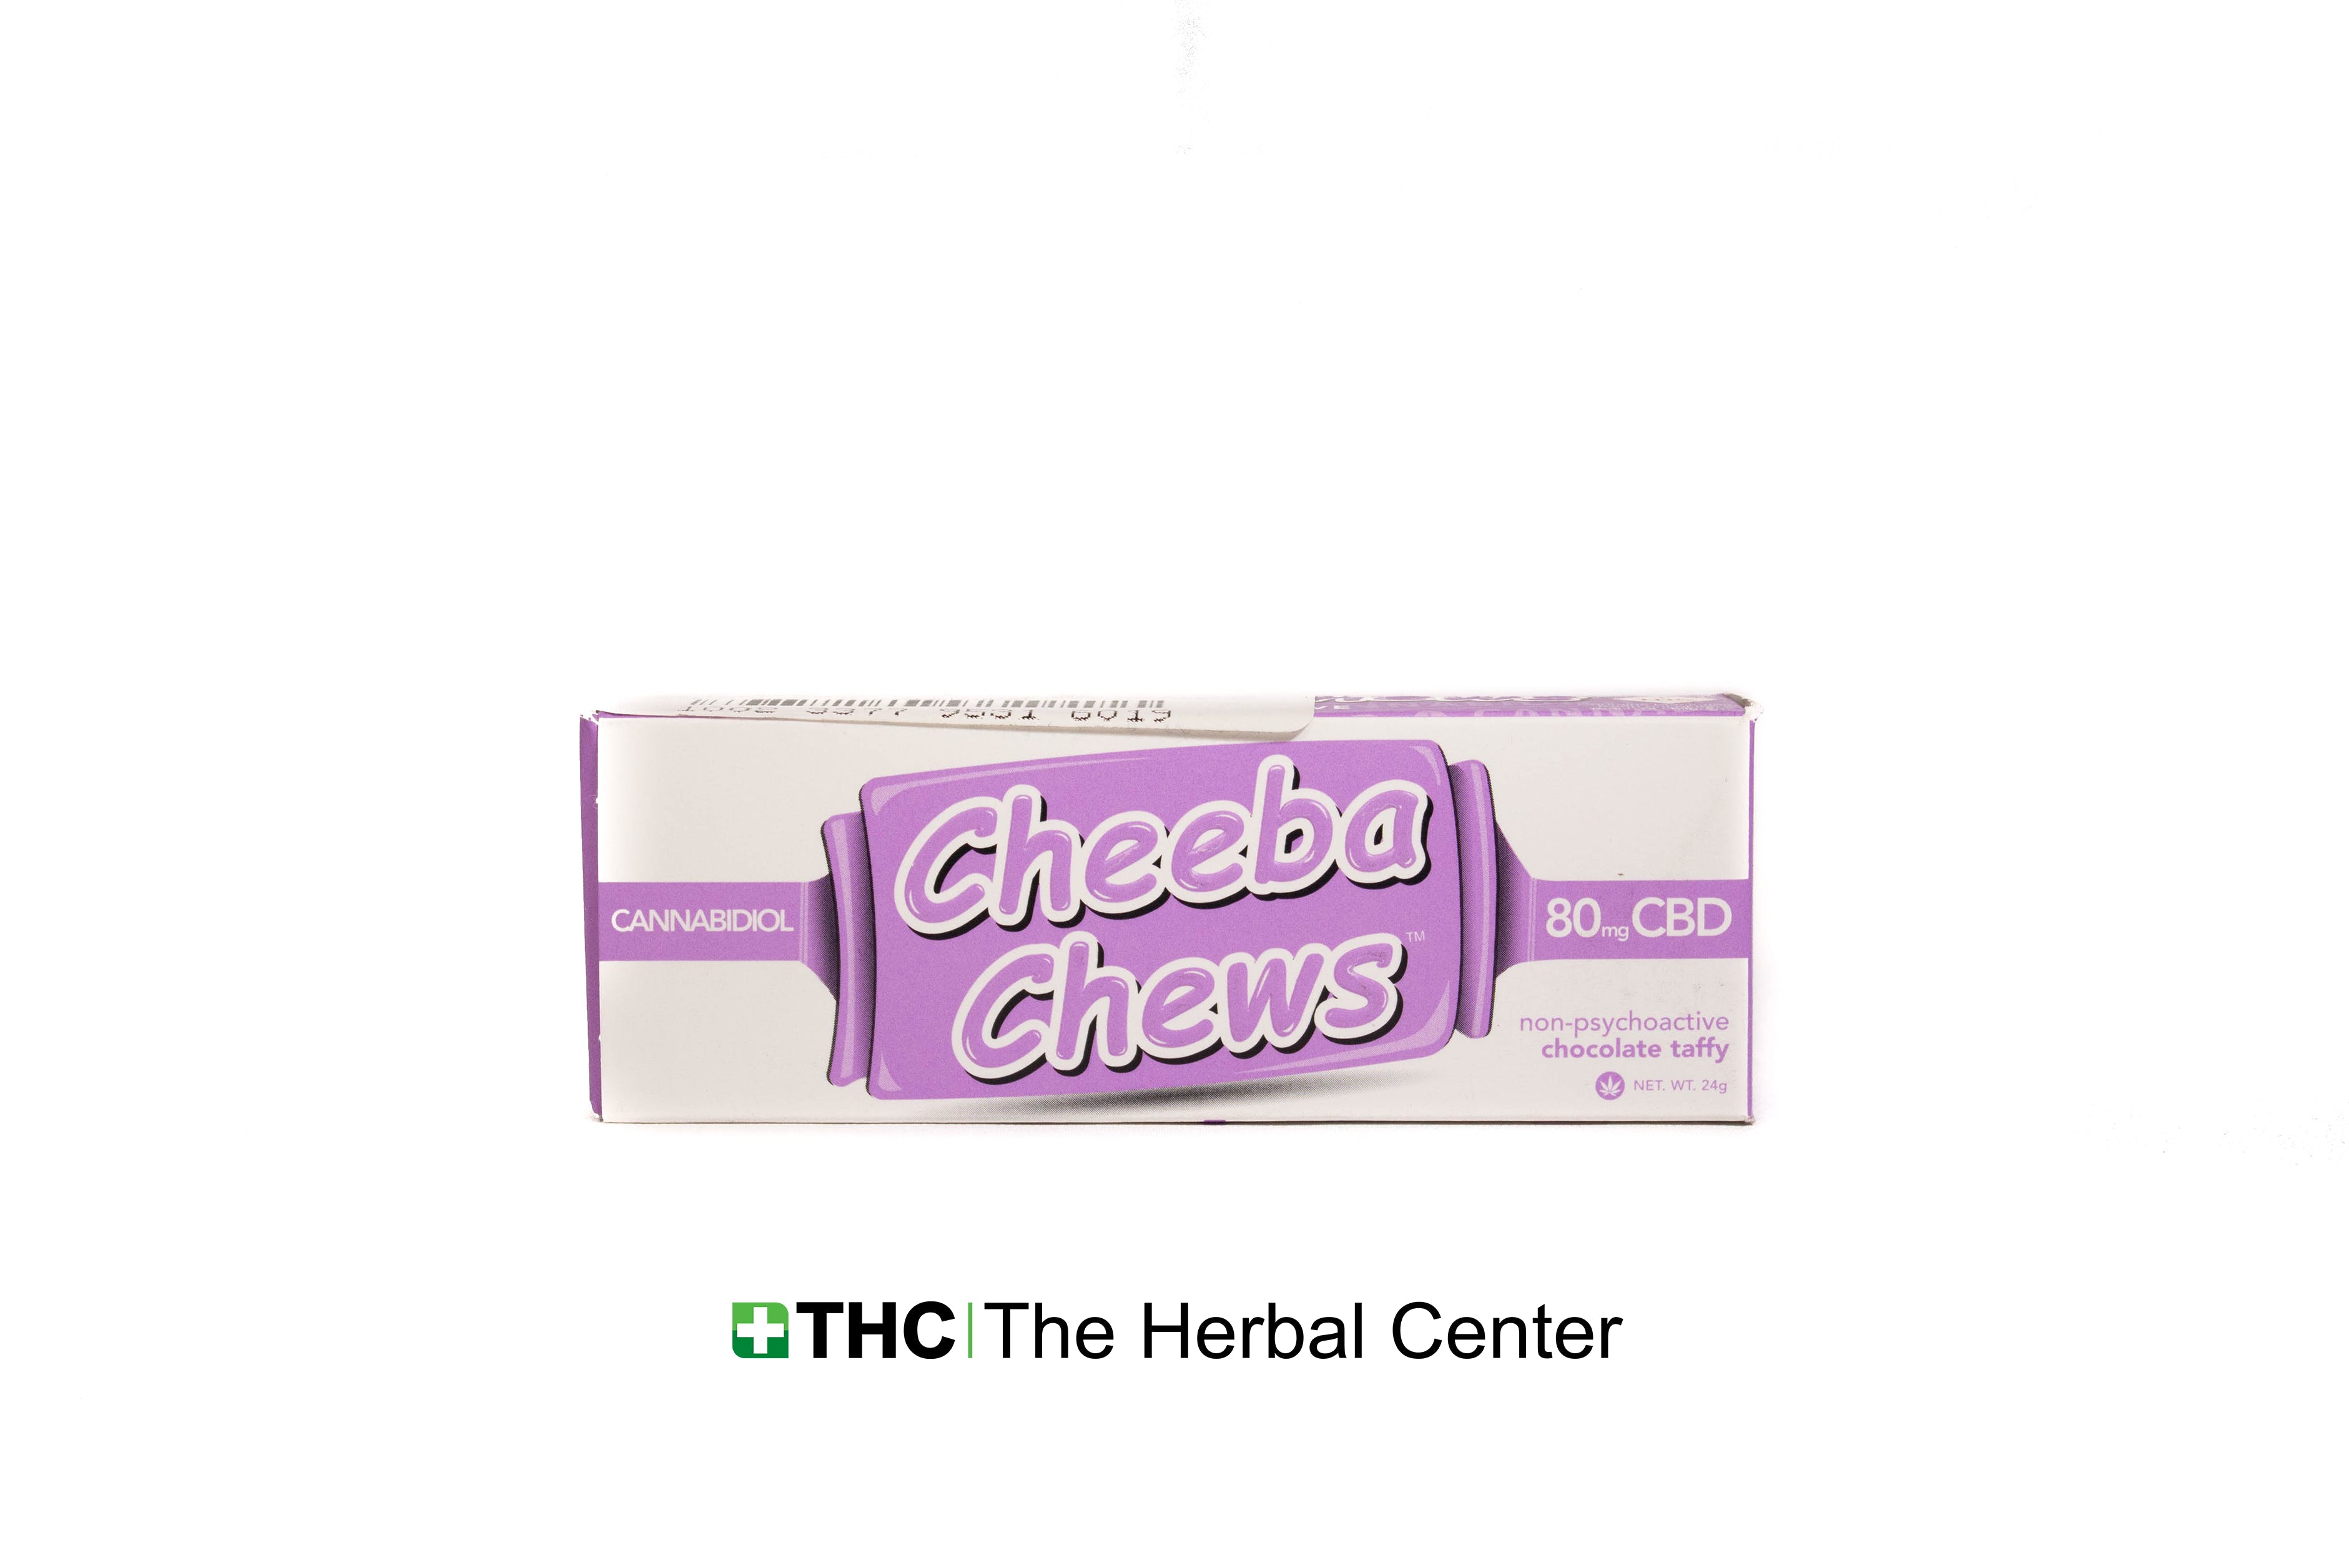 marijuana-dispensaries-the-herbal-center-broadway-rec-in-denver-cheeba-chews-80mg-cbd